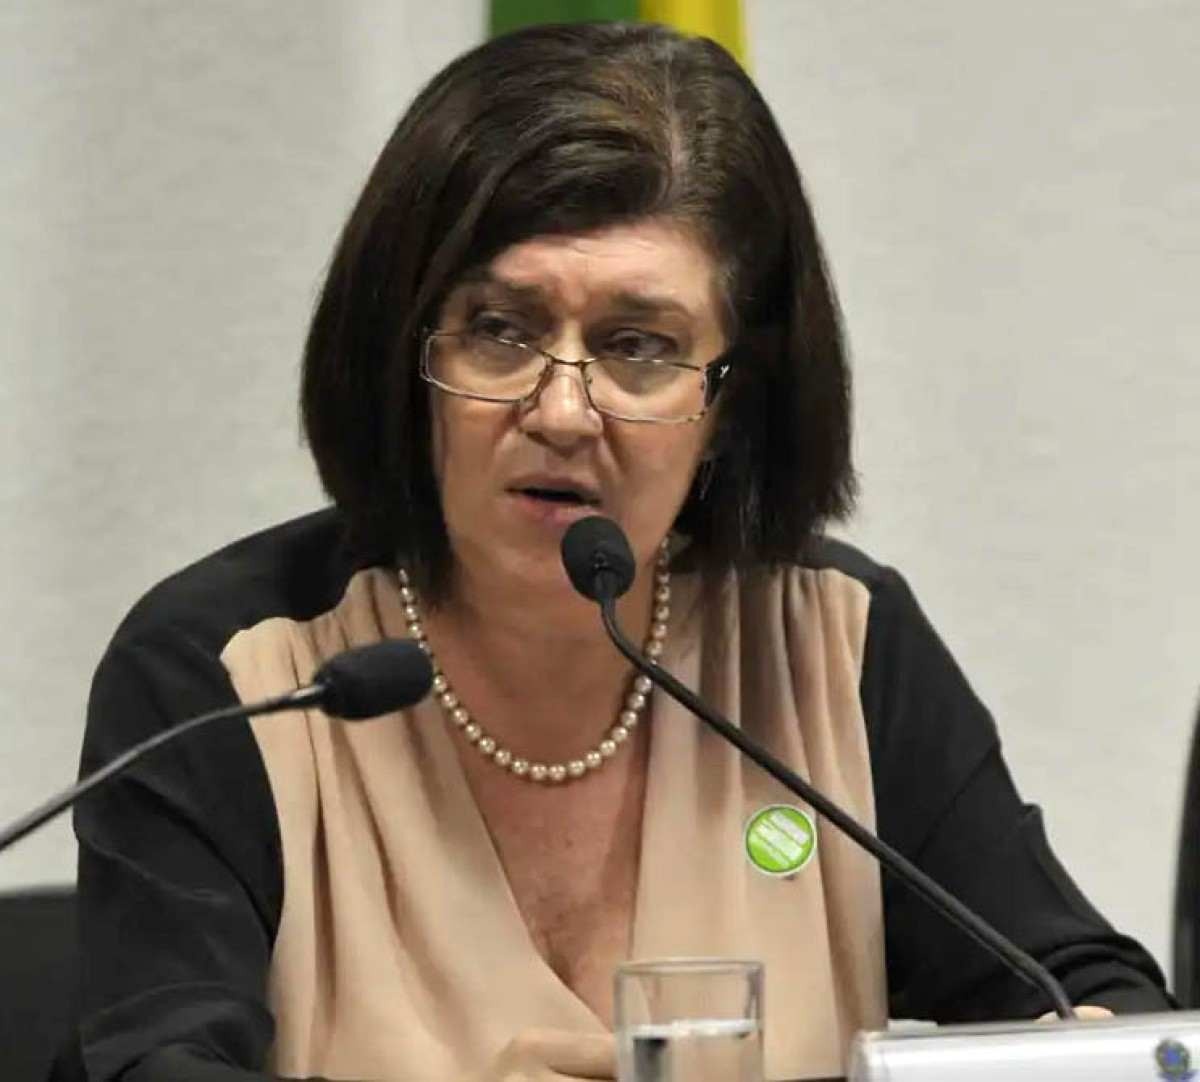 Magda Chambriard é aprovada como nova presidente da Petrobras